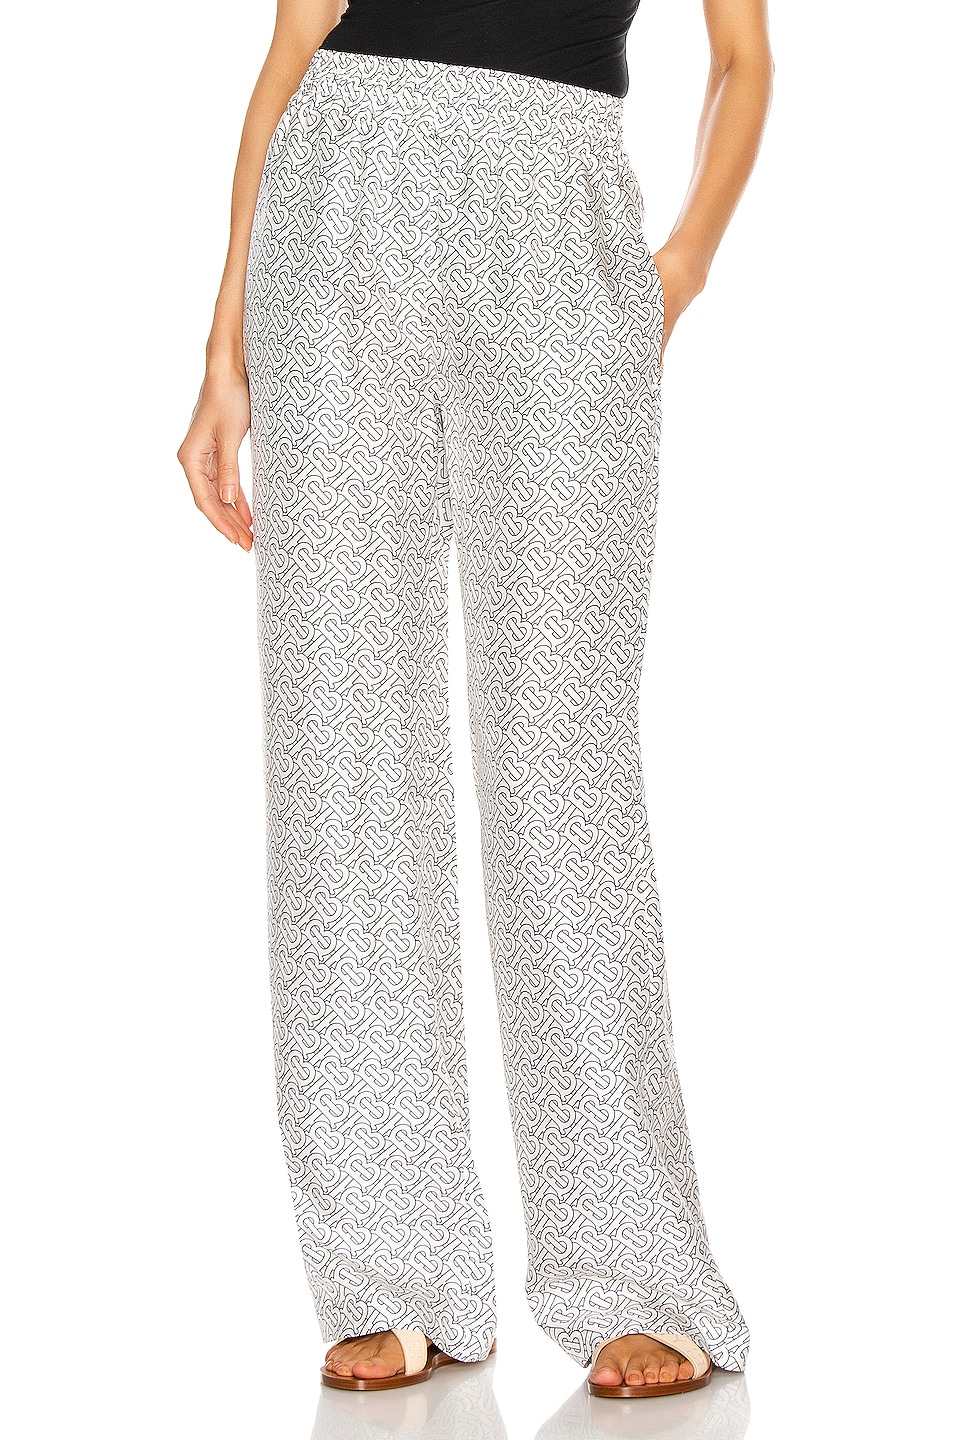 Burberry Monogram Pajama Pant in Black & White | FWRD